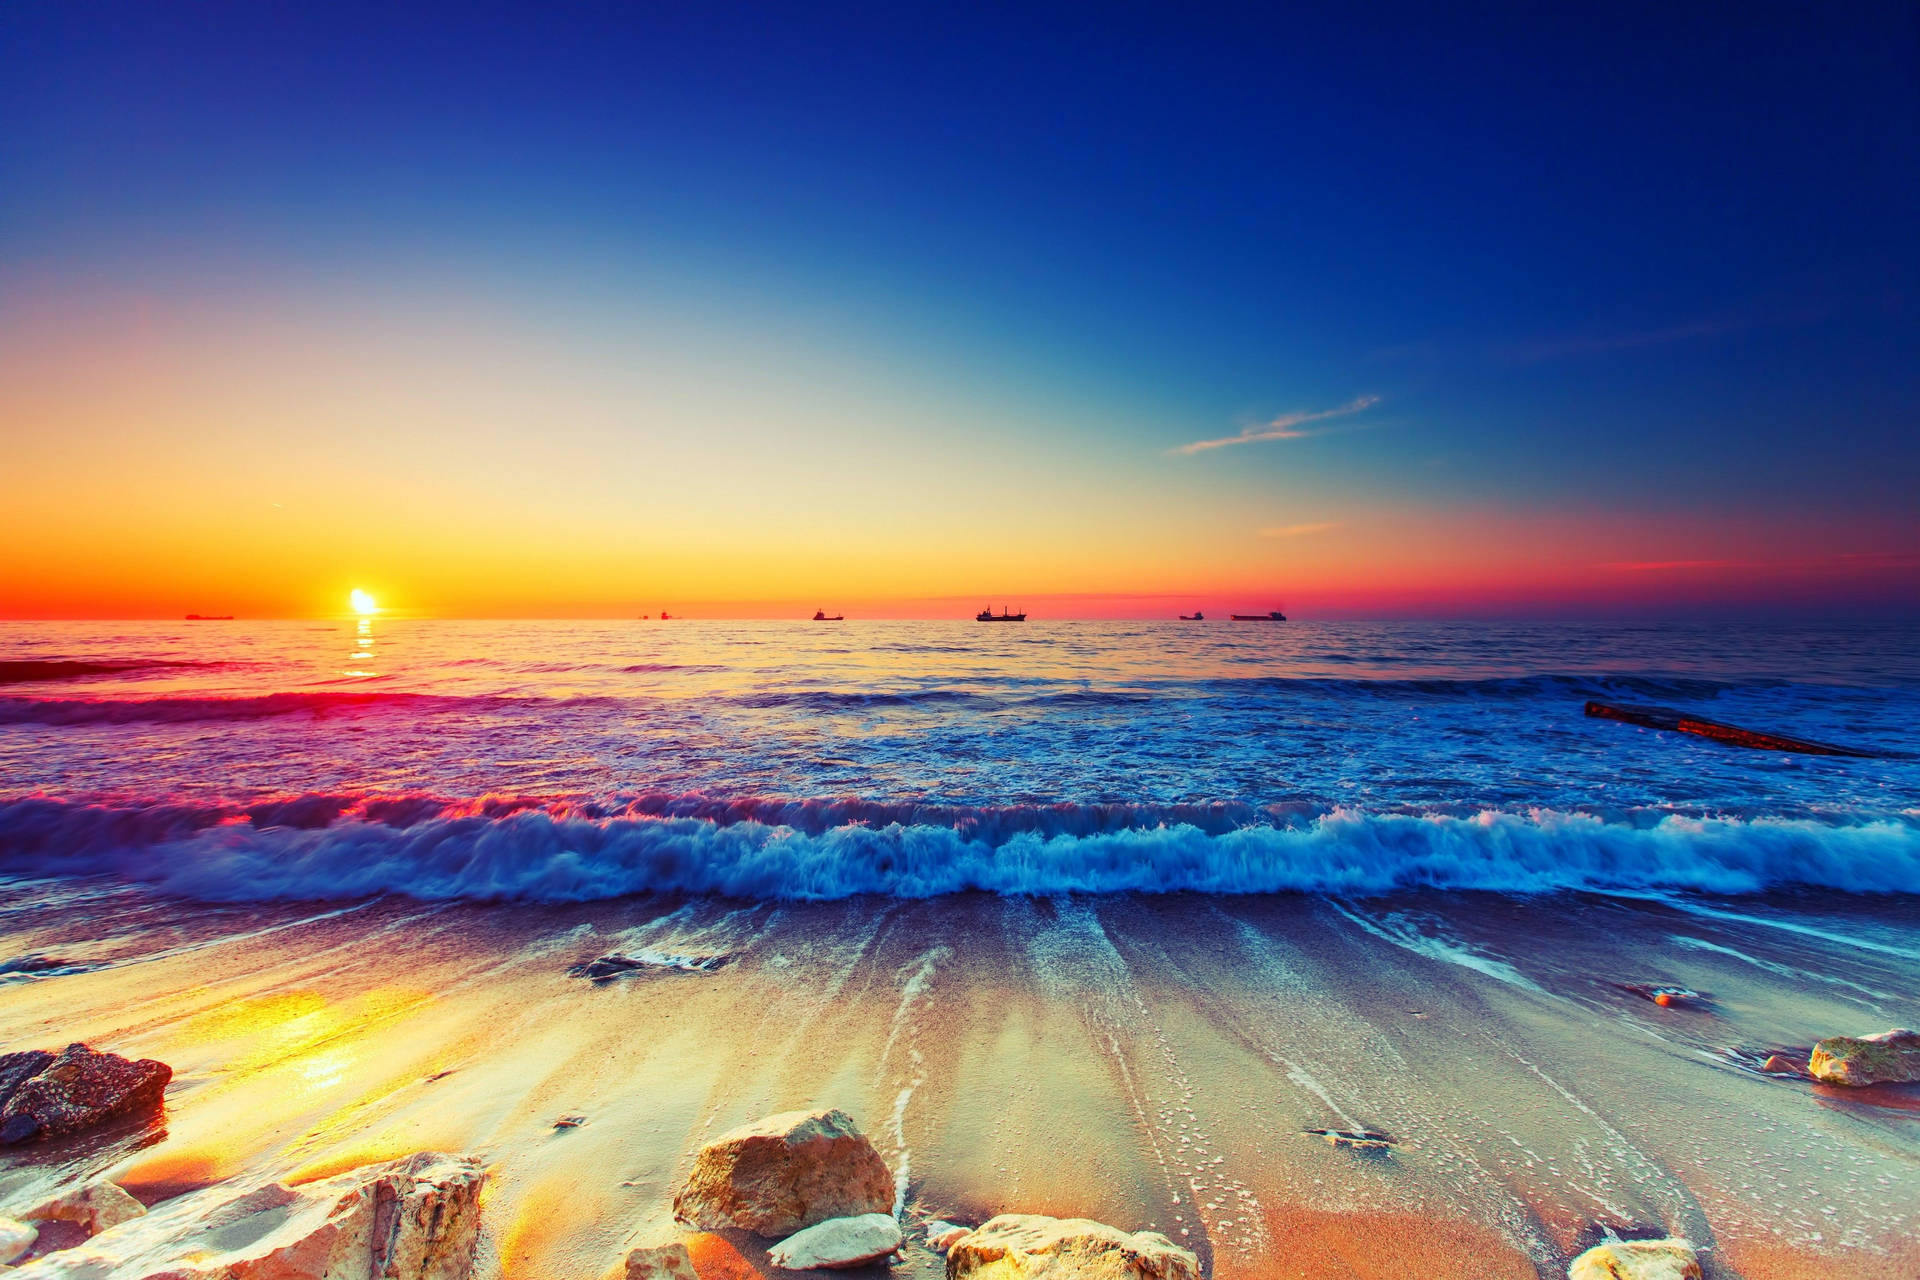 Colorful Aesthetic Ocean Sunset Wallpaper